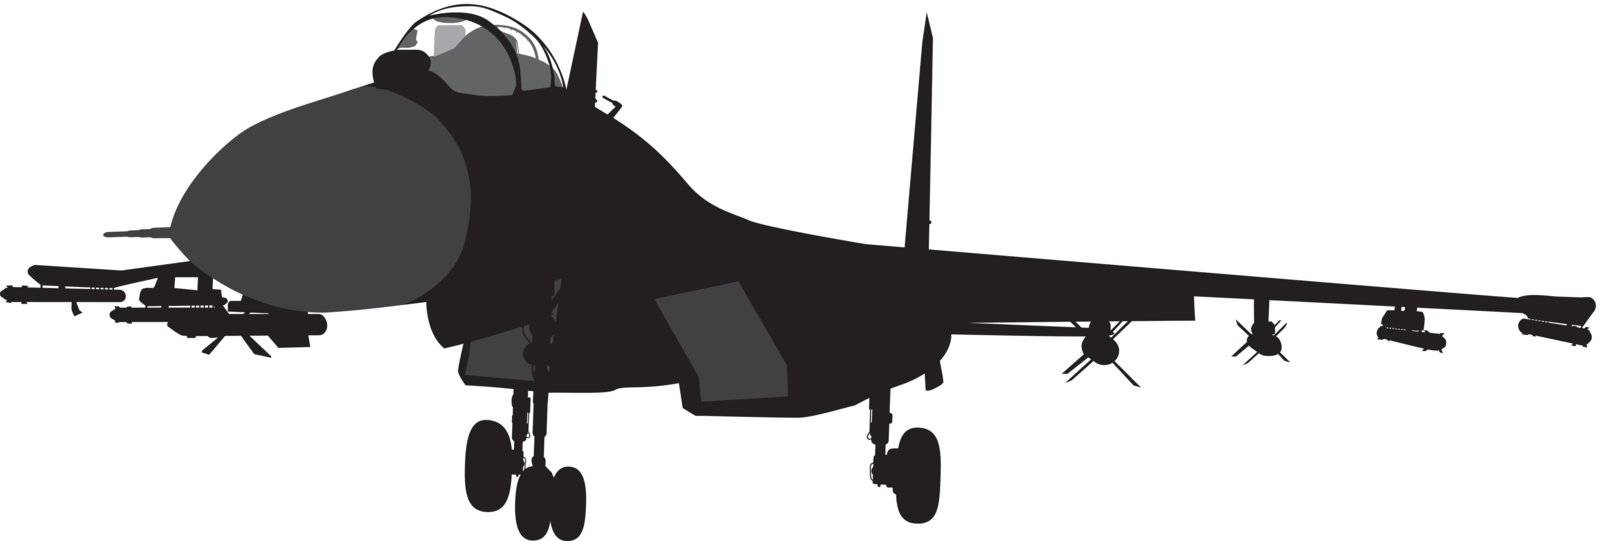 Su-35 Russian fighter aircraft vector silhouette